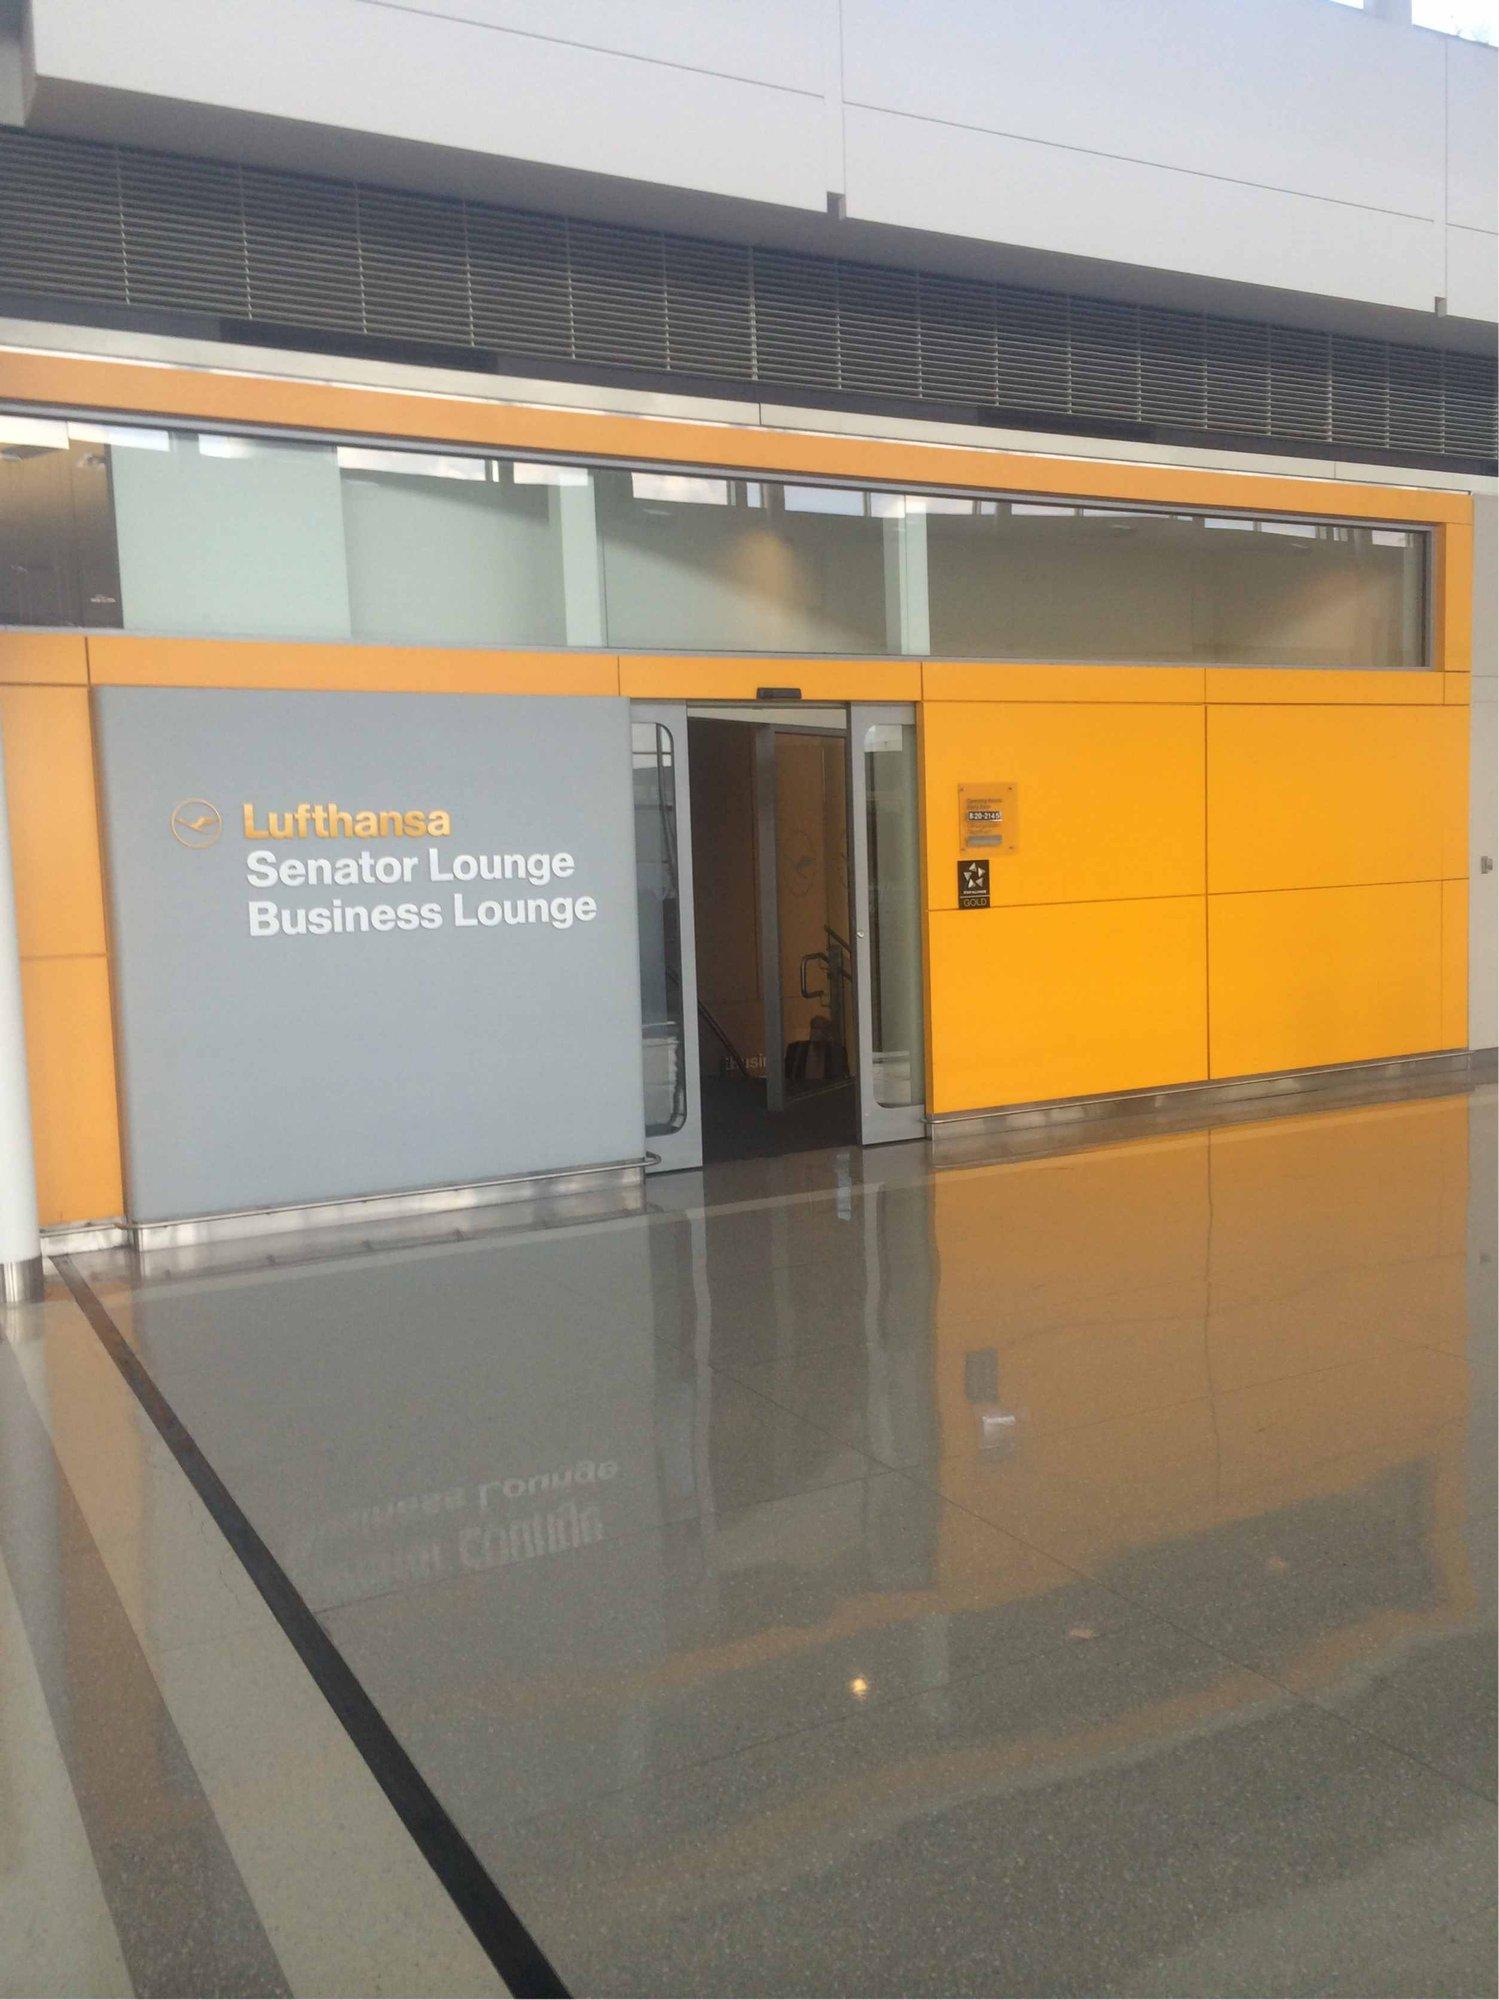 Lufthansa Senator Lounge  image 16 of 32